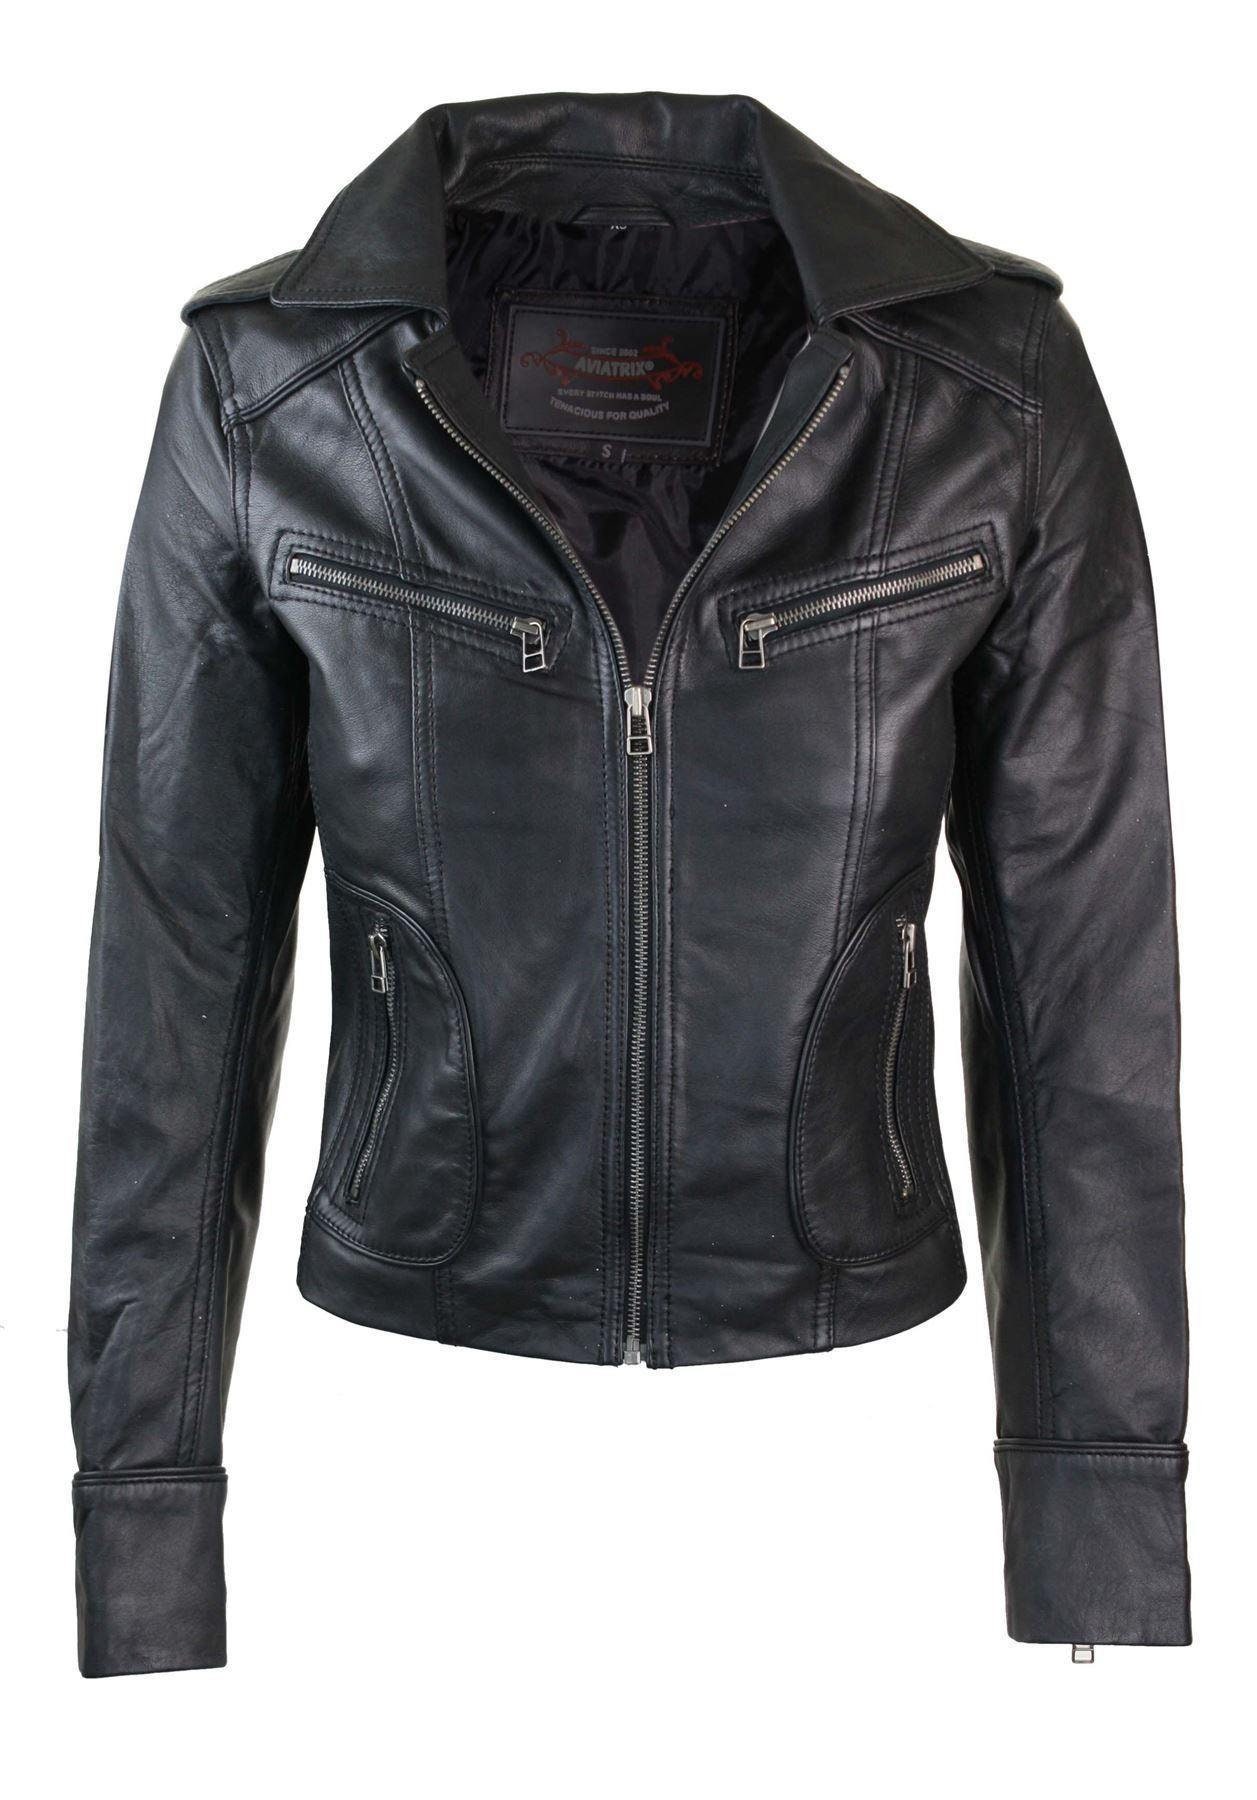 Ladies real leather black or yellow biker style fashion jacket | Etsy